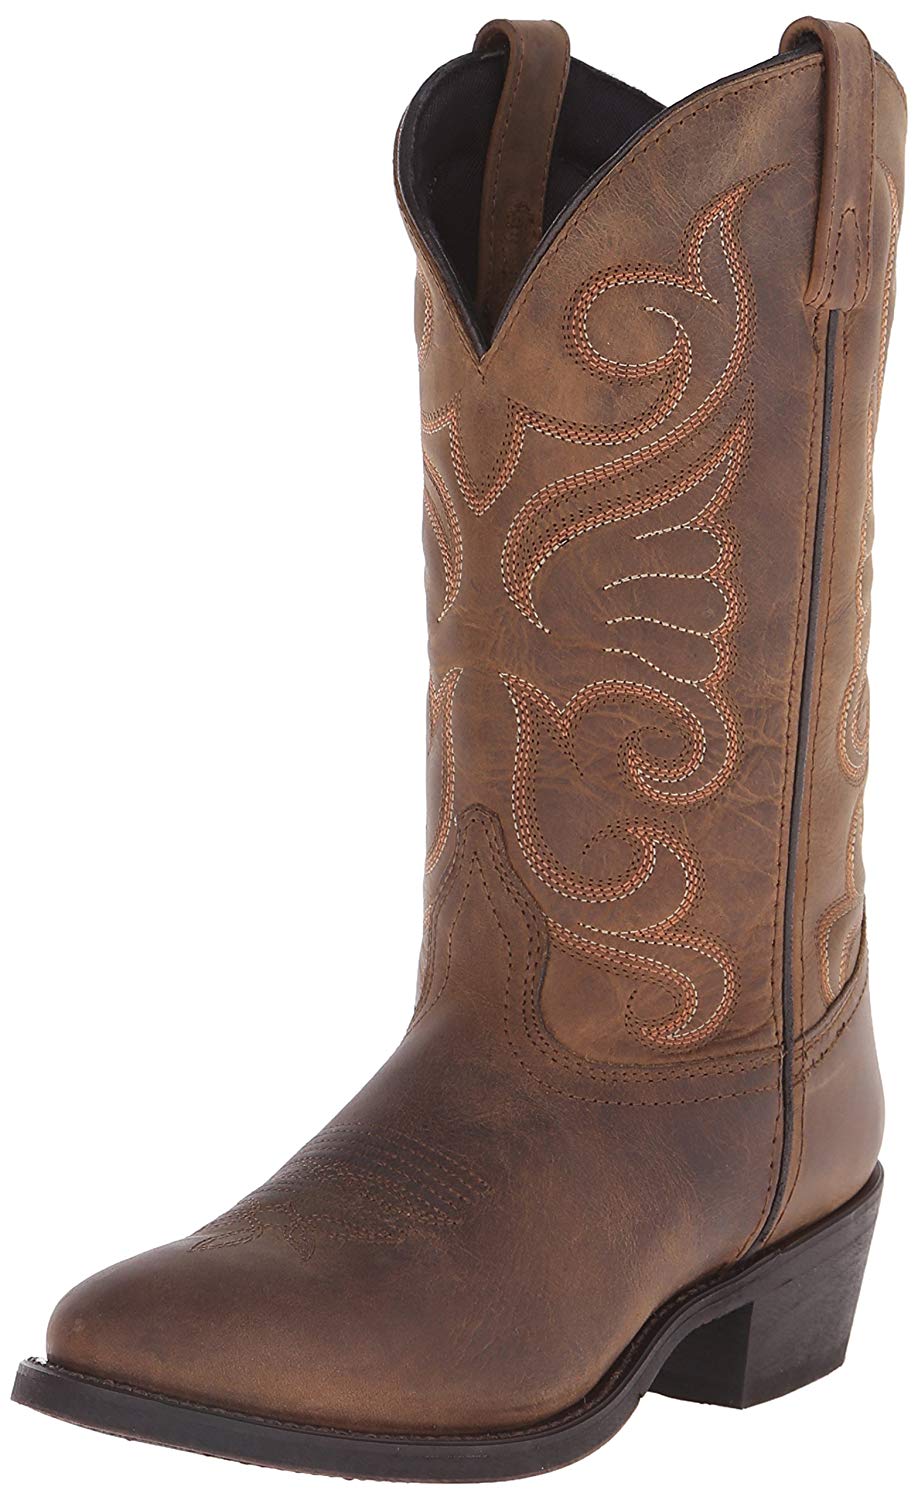 Laredo Women's Bridget Western Boot, Tan, Size 7.5 TdTX | eBay